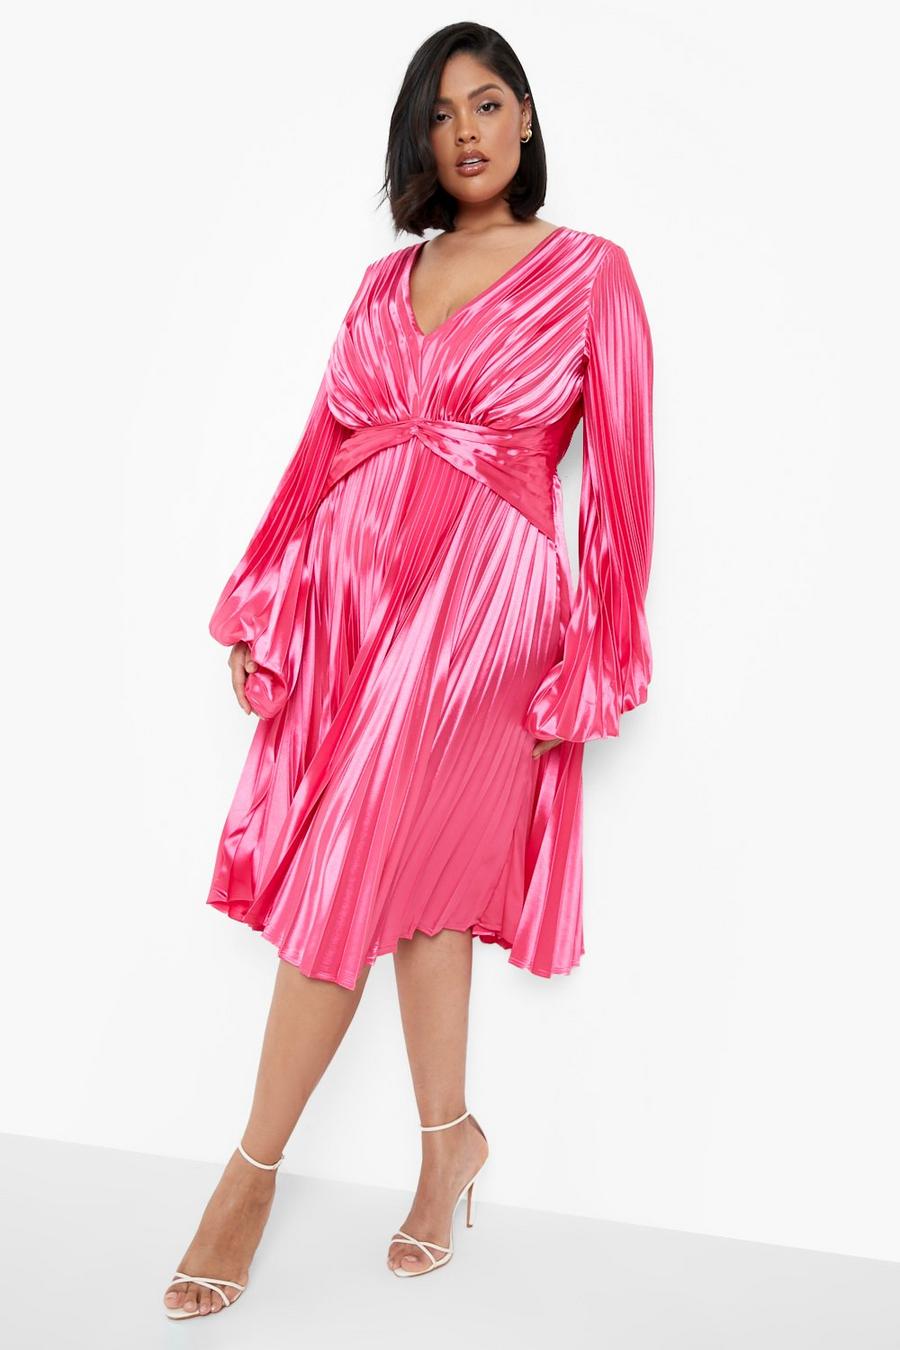 Grande taille - Robe mi-longue satinée effet plissé, Hot pink rose image number 1